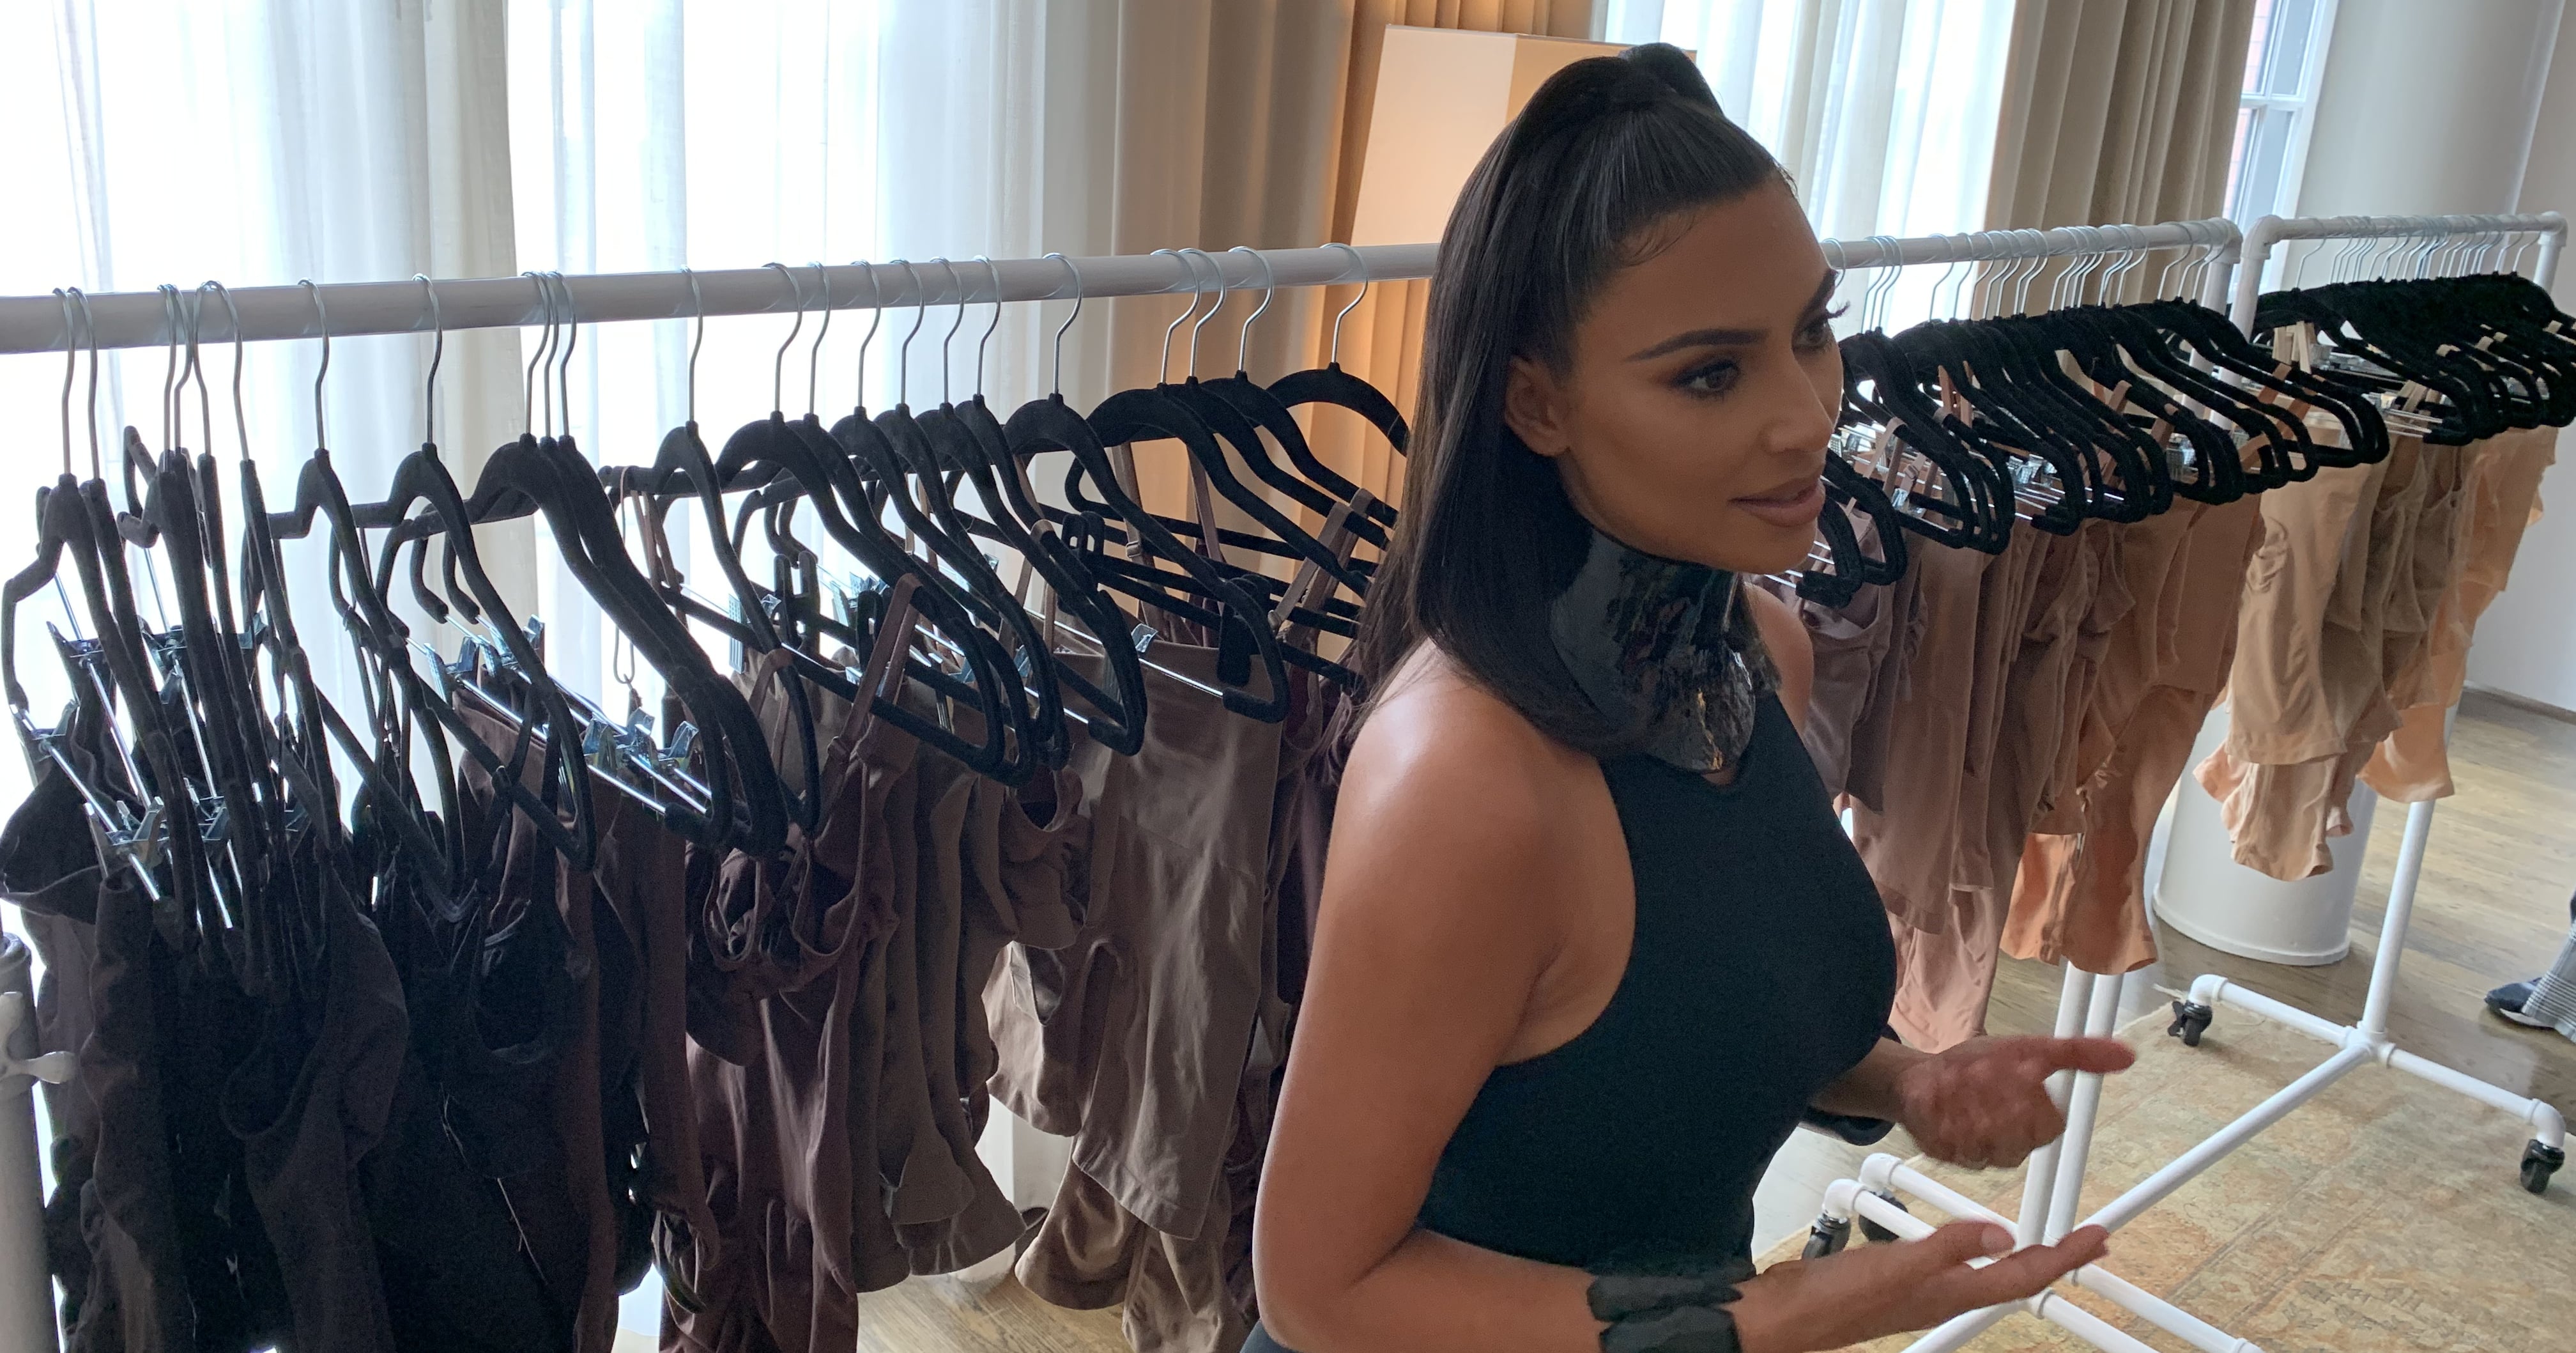 Kim Kardashian shows off shocking hair makeover in just her underwear for  new SKIMS ad